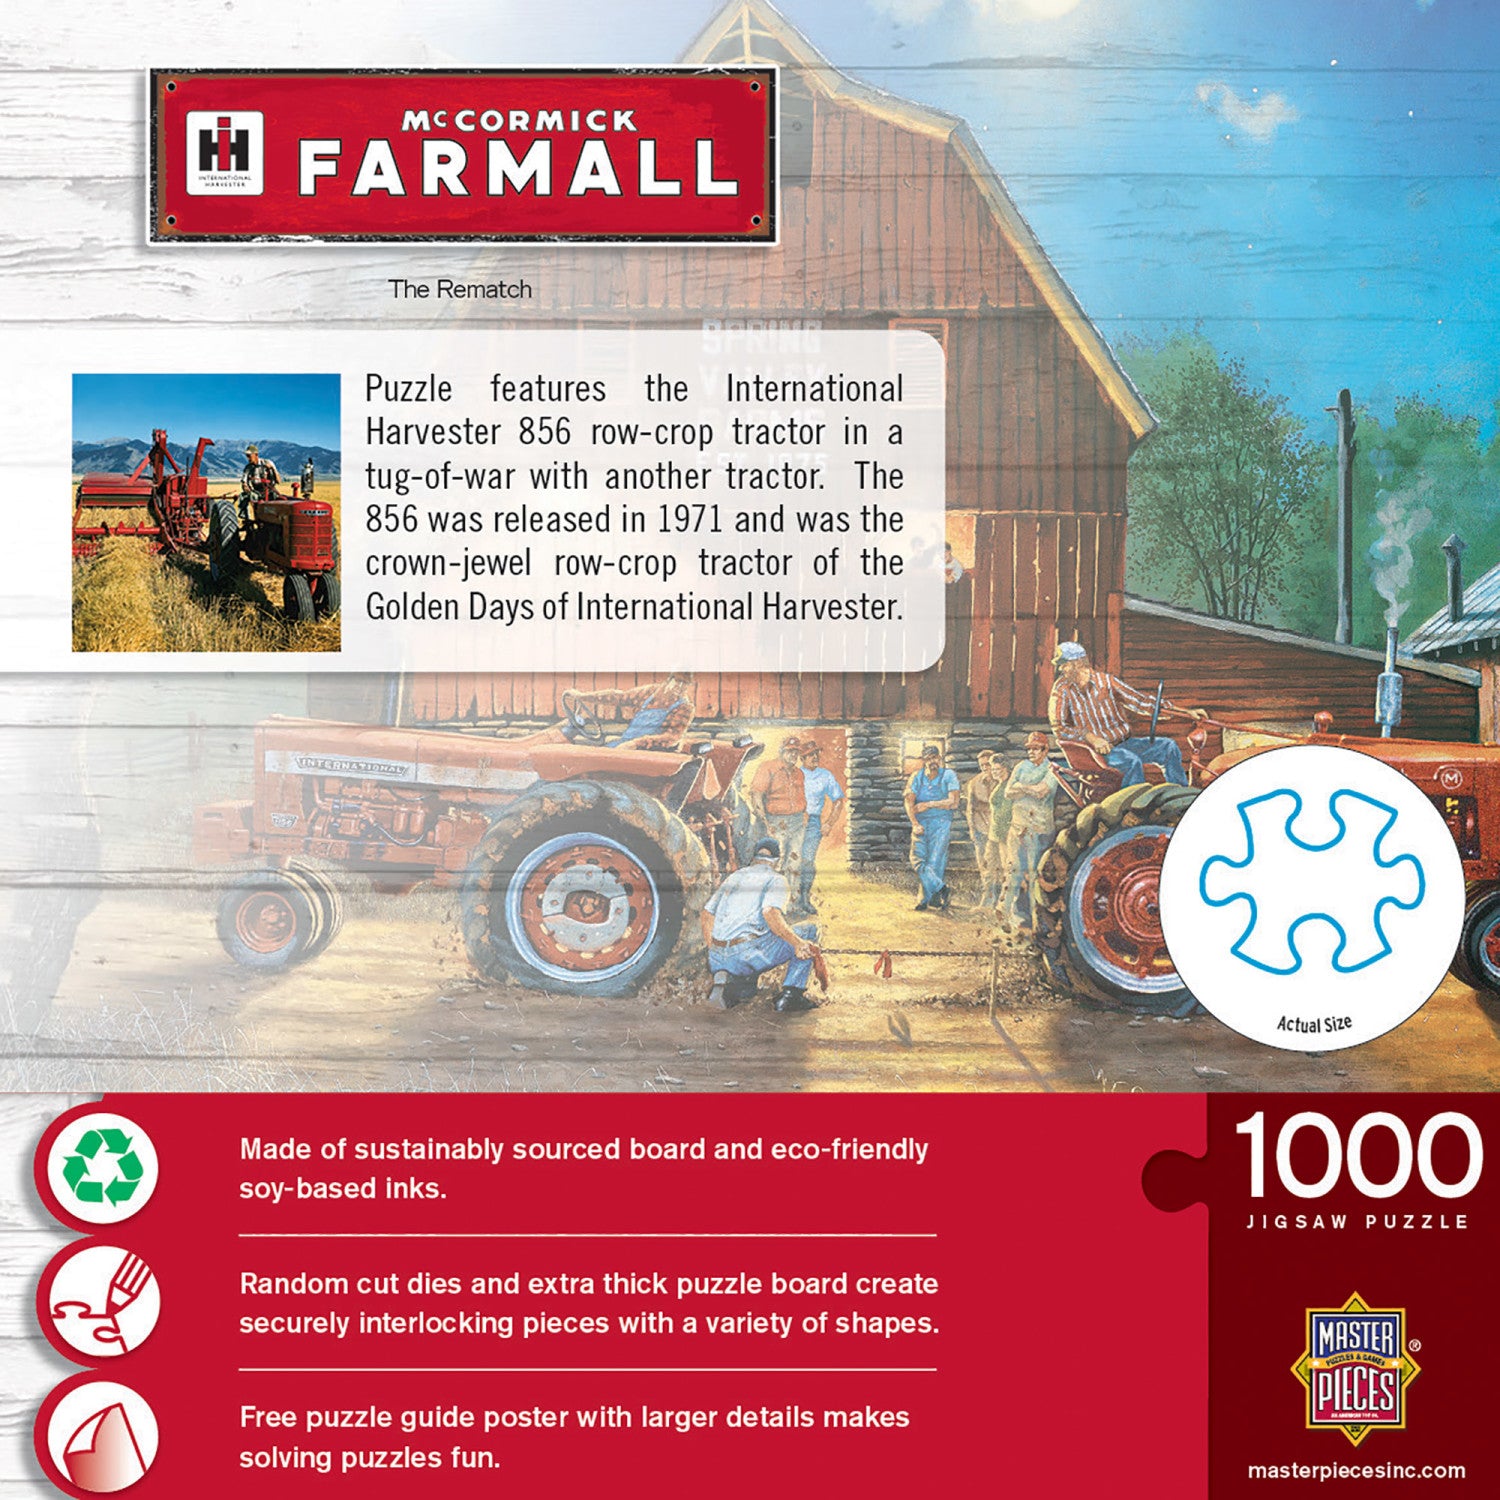 Farmall - The Rematch 1000 Piece Jigsaw Puzzle